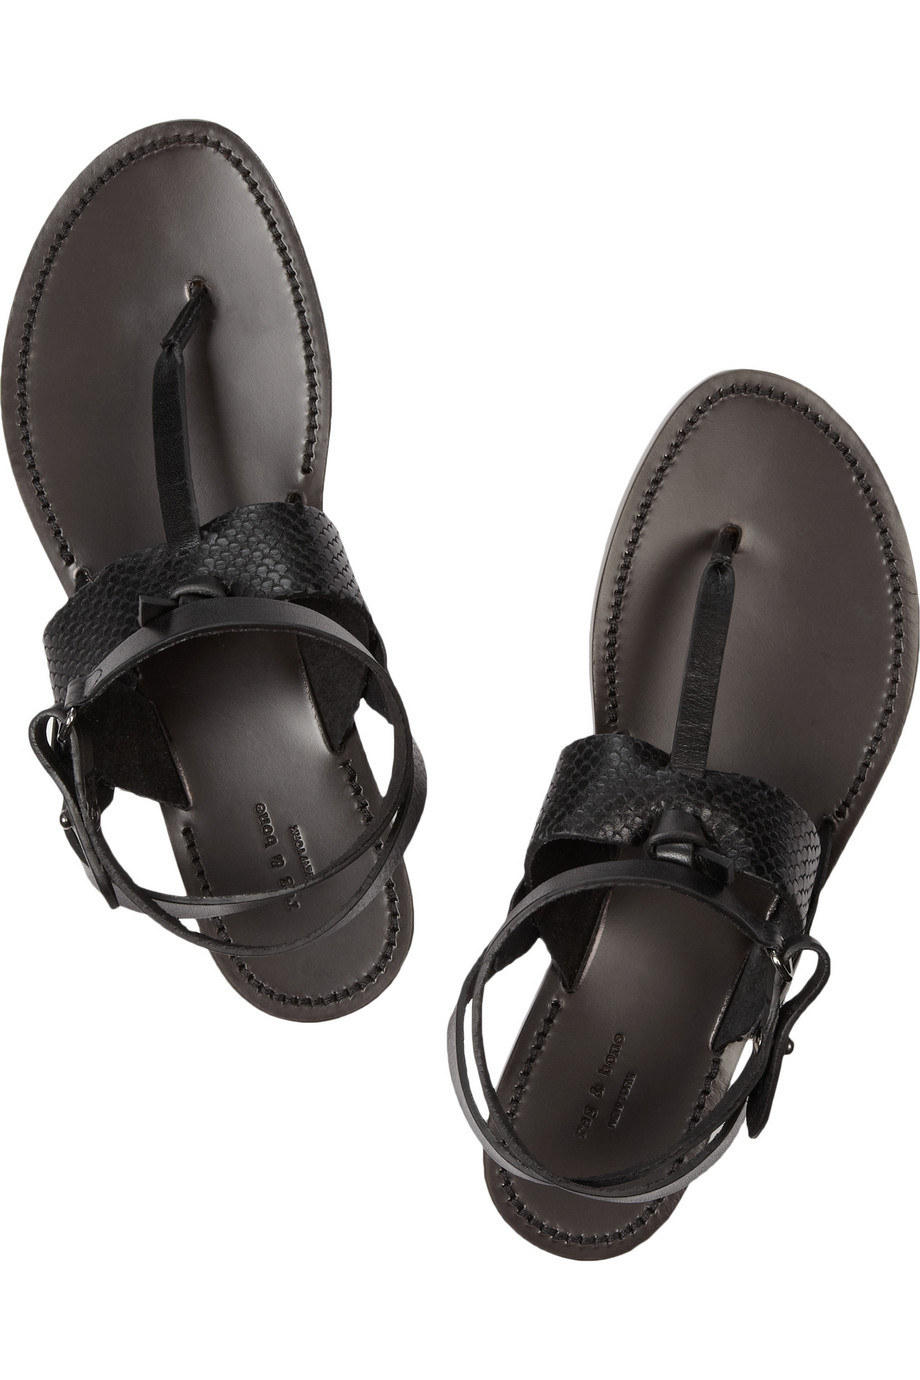 Lyst - Rag & bone Sigrid Textured leather Sandals in Black